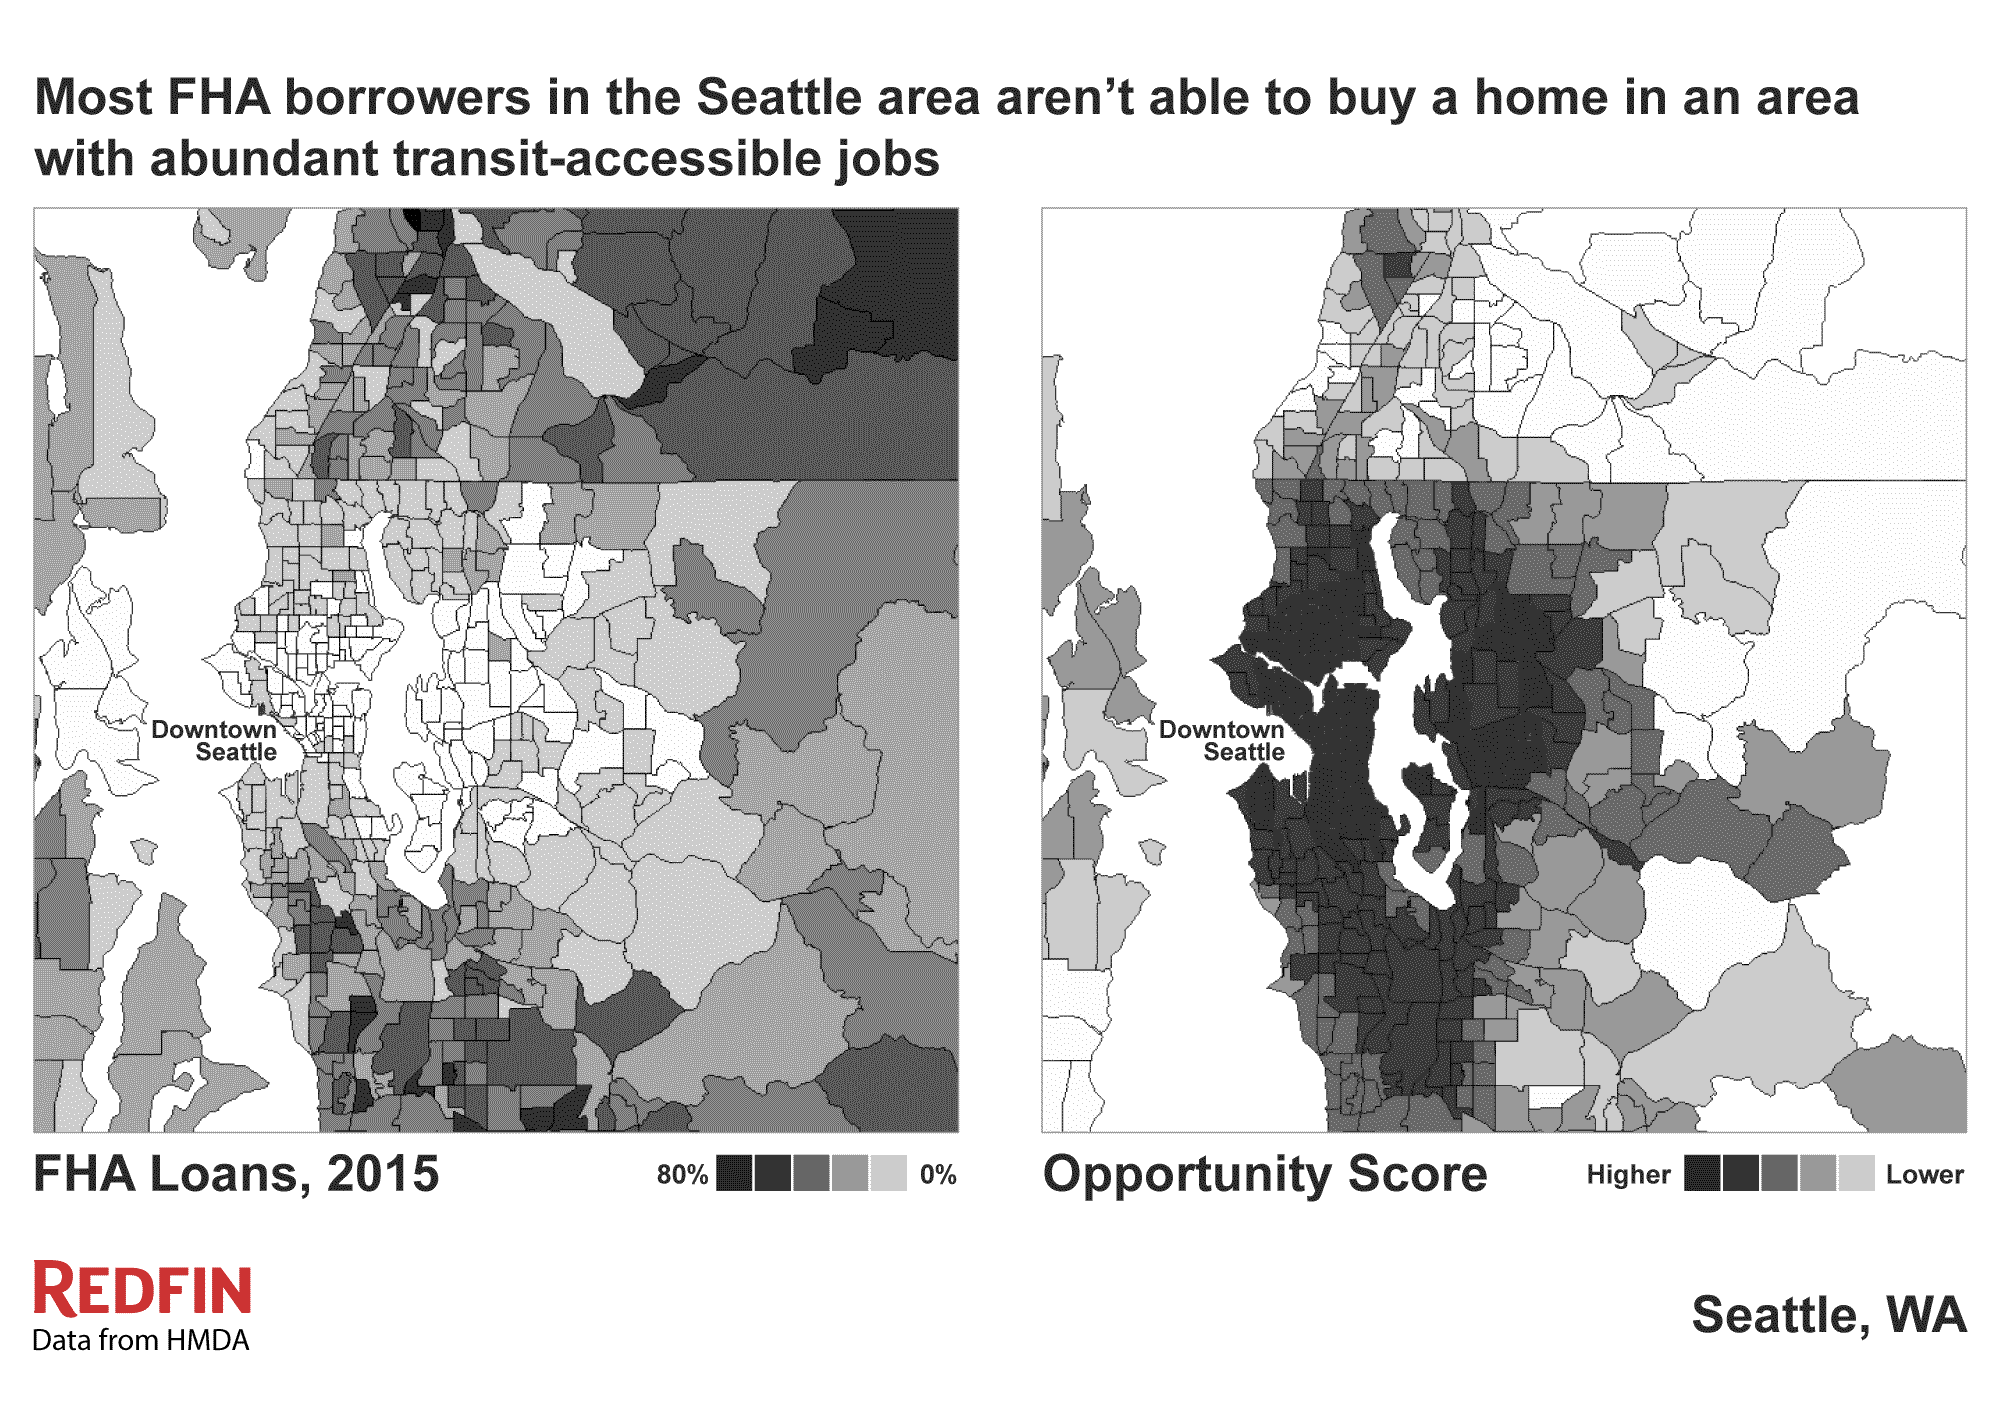 Figure: FHA loan share in the Seattle area (left), Opportunity Score in the Seattle area (right)